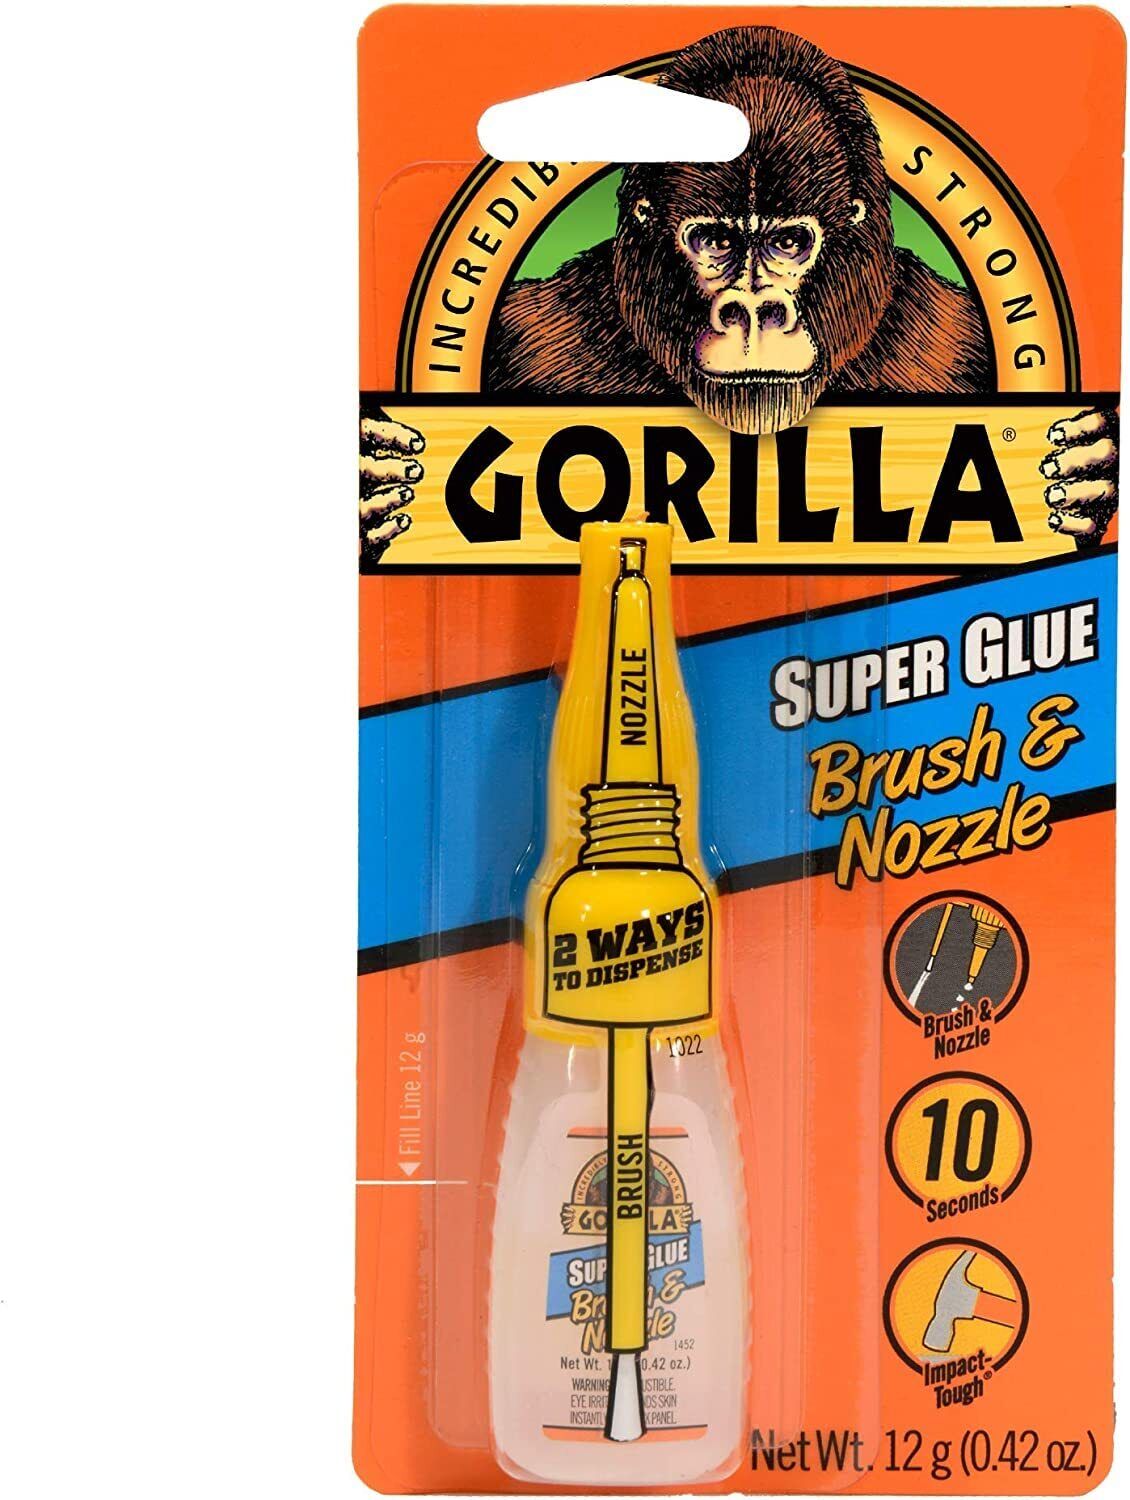 GORILLA Super Glue 2 Way BRUSH or NOZZLE High Strength Dries Clear .35oz 7500102